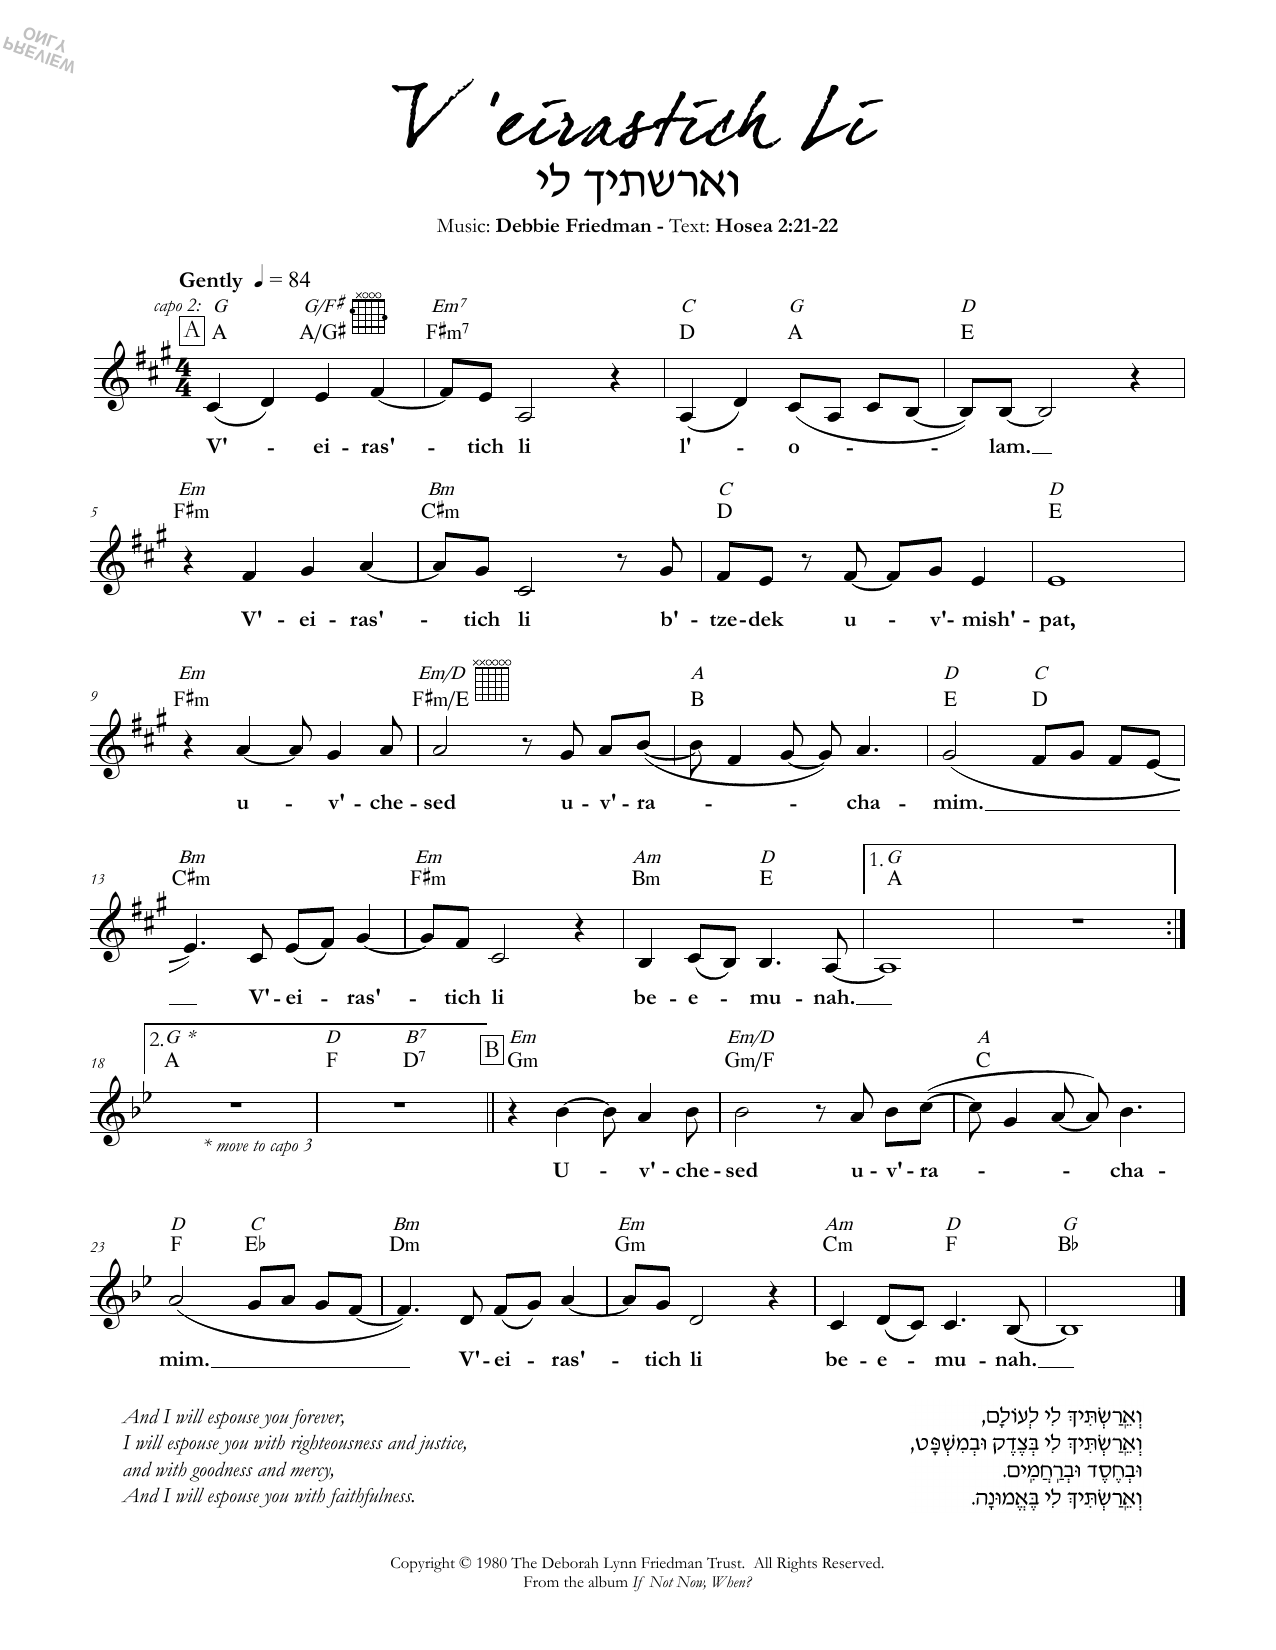 Download Debbie Friedman V'eirastich Li Sheet Music and learn how to play Lead Sheet / Fake Book PDF digital score in minutes